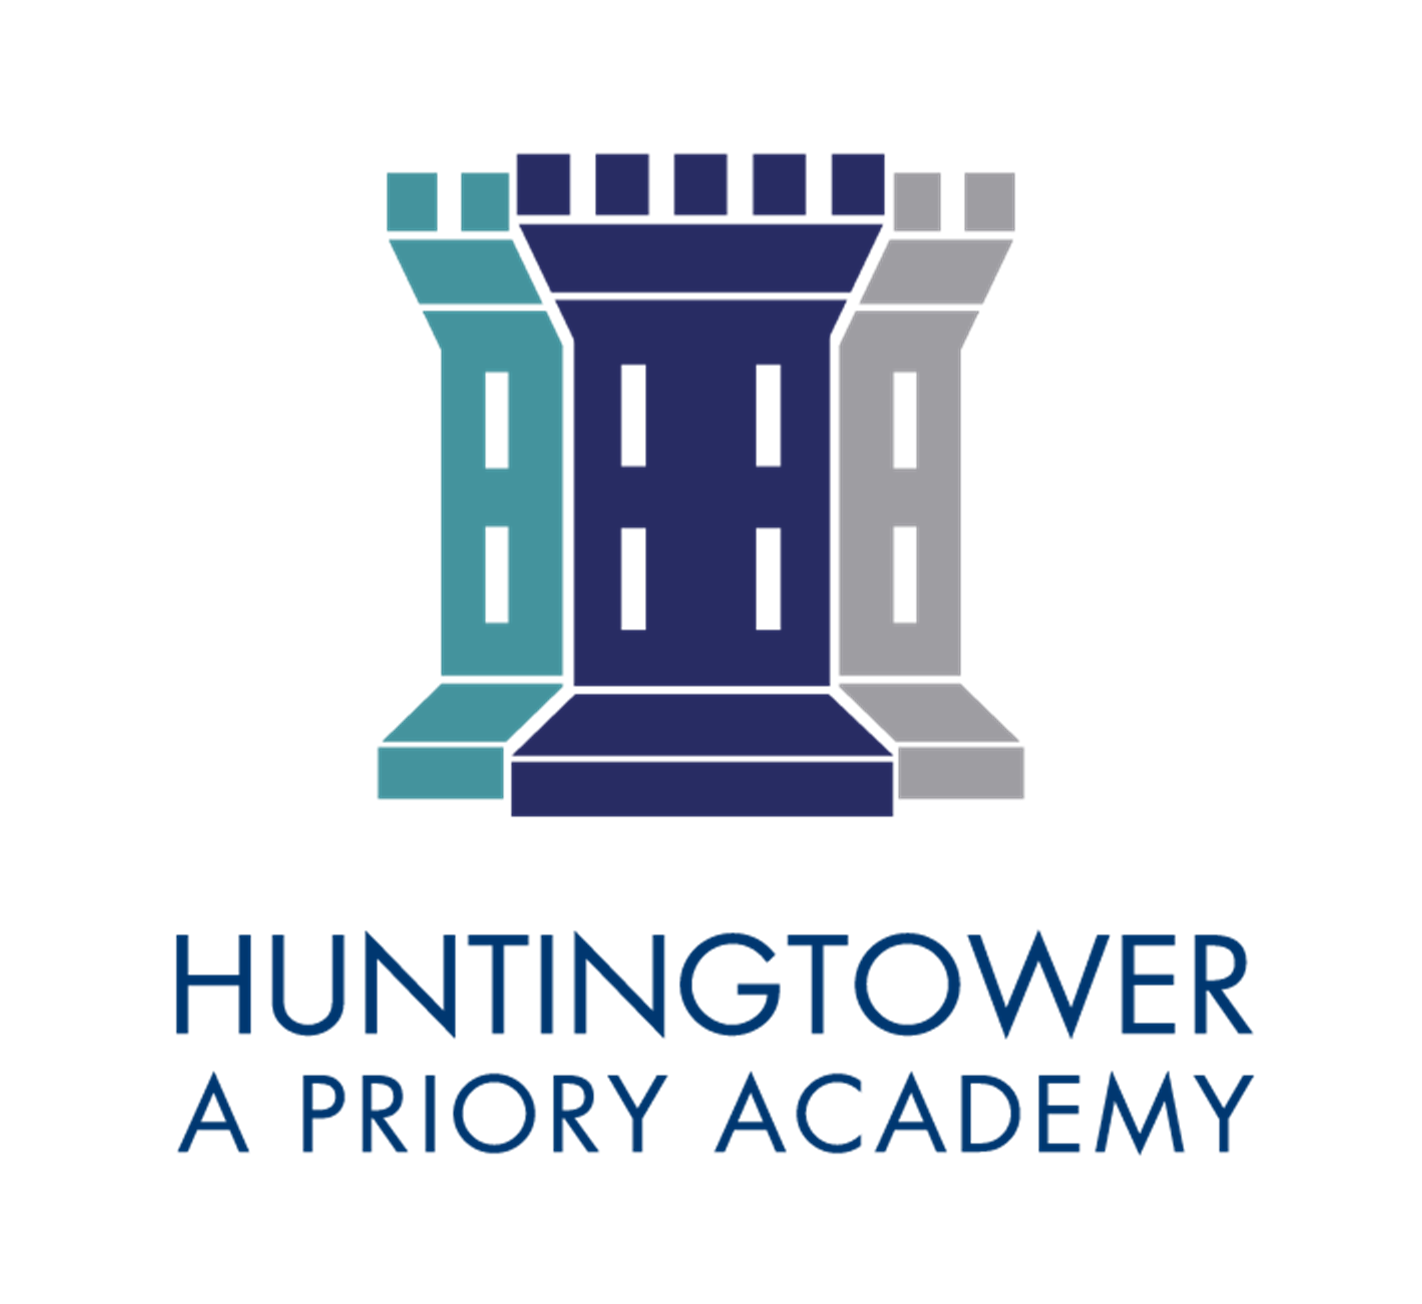 The logo of Huntingtower Community Primary Academy.